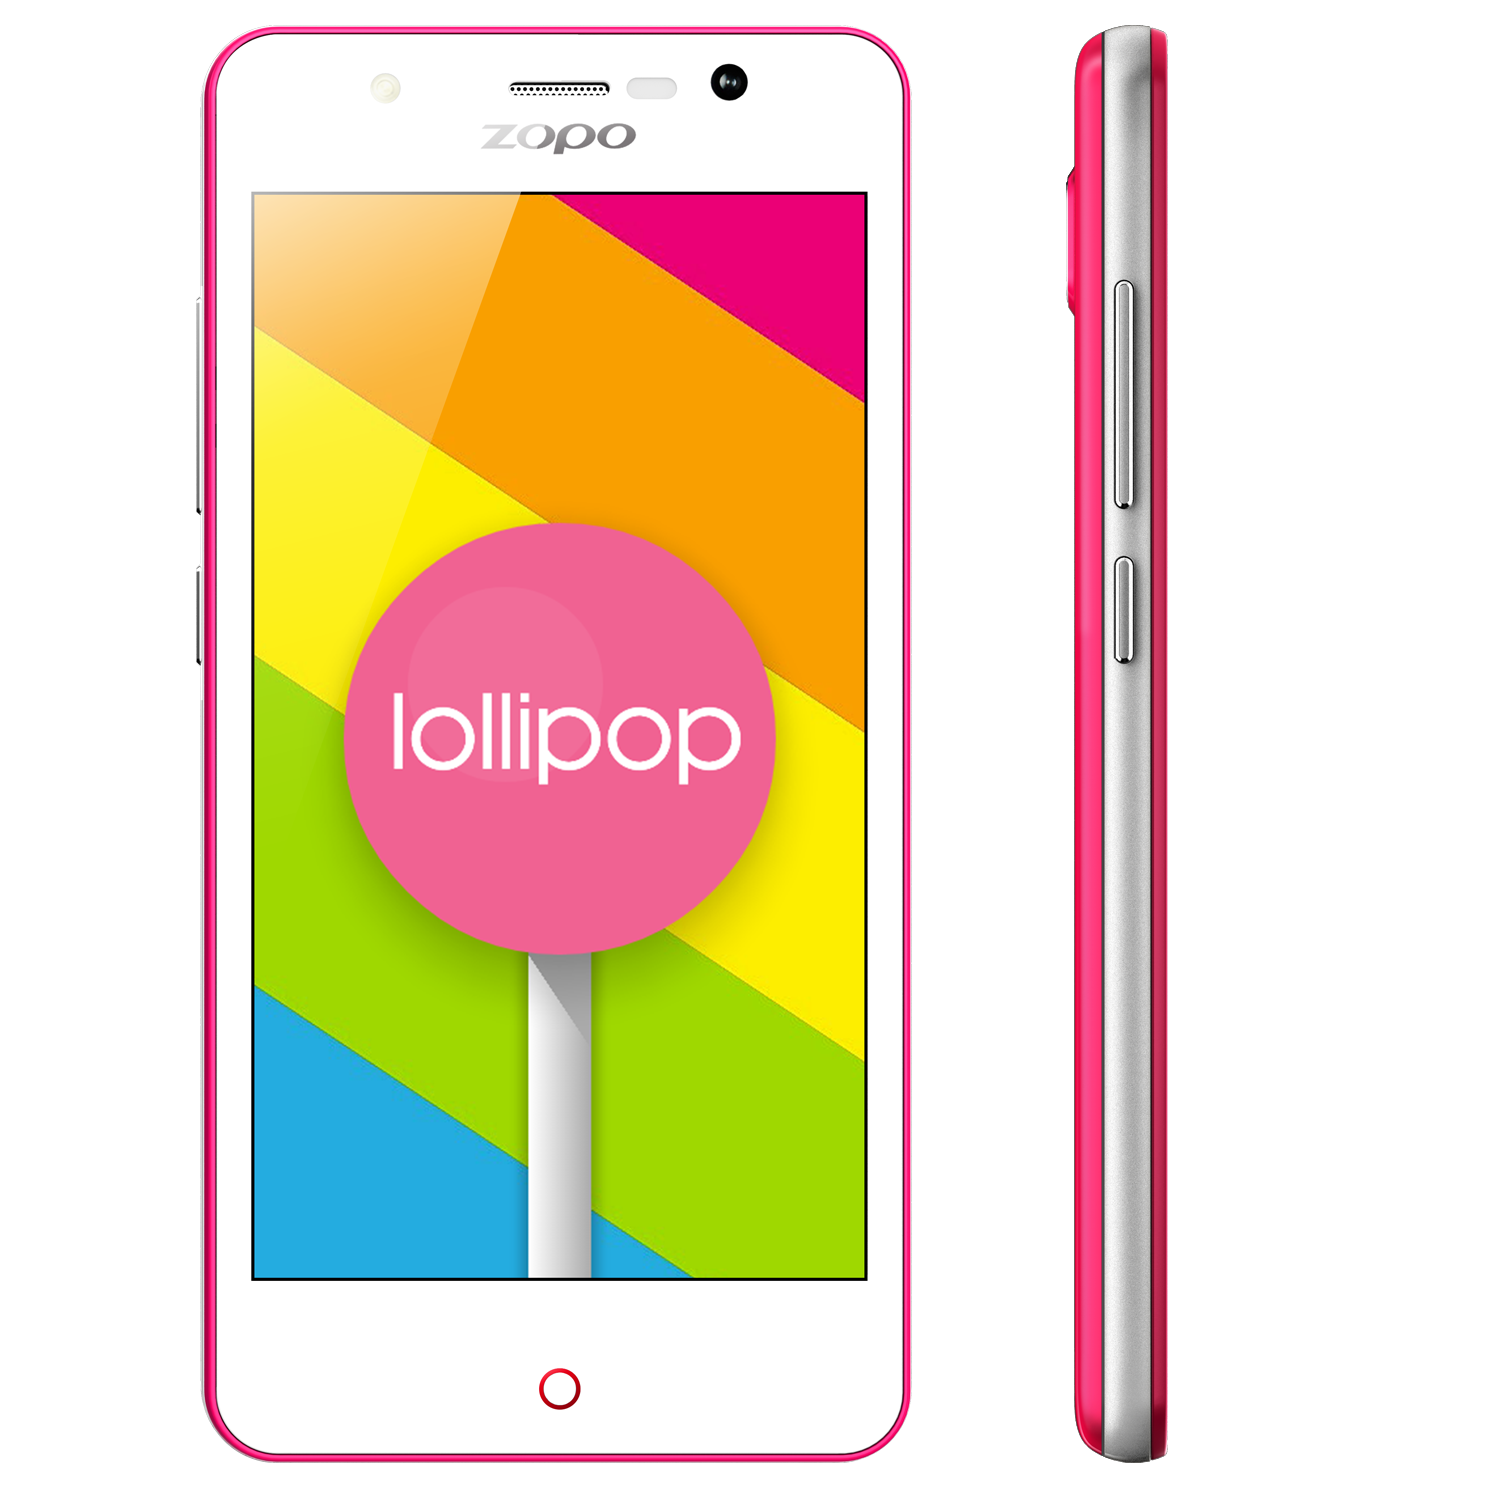 ZOPO ZP330 Smartphone 4G LTE Android 5.1 64bit MTK6735M Quad Core 1GB 8GB 4.5 Inch Red